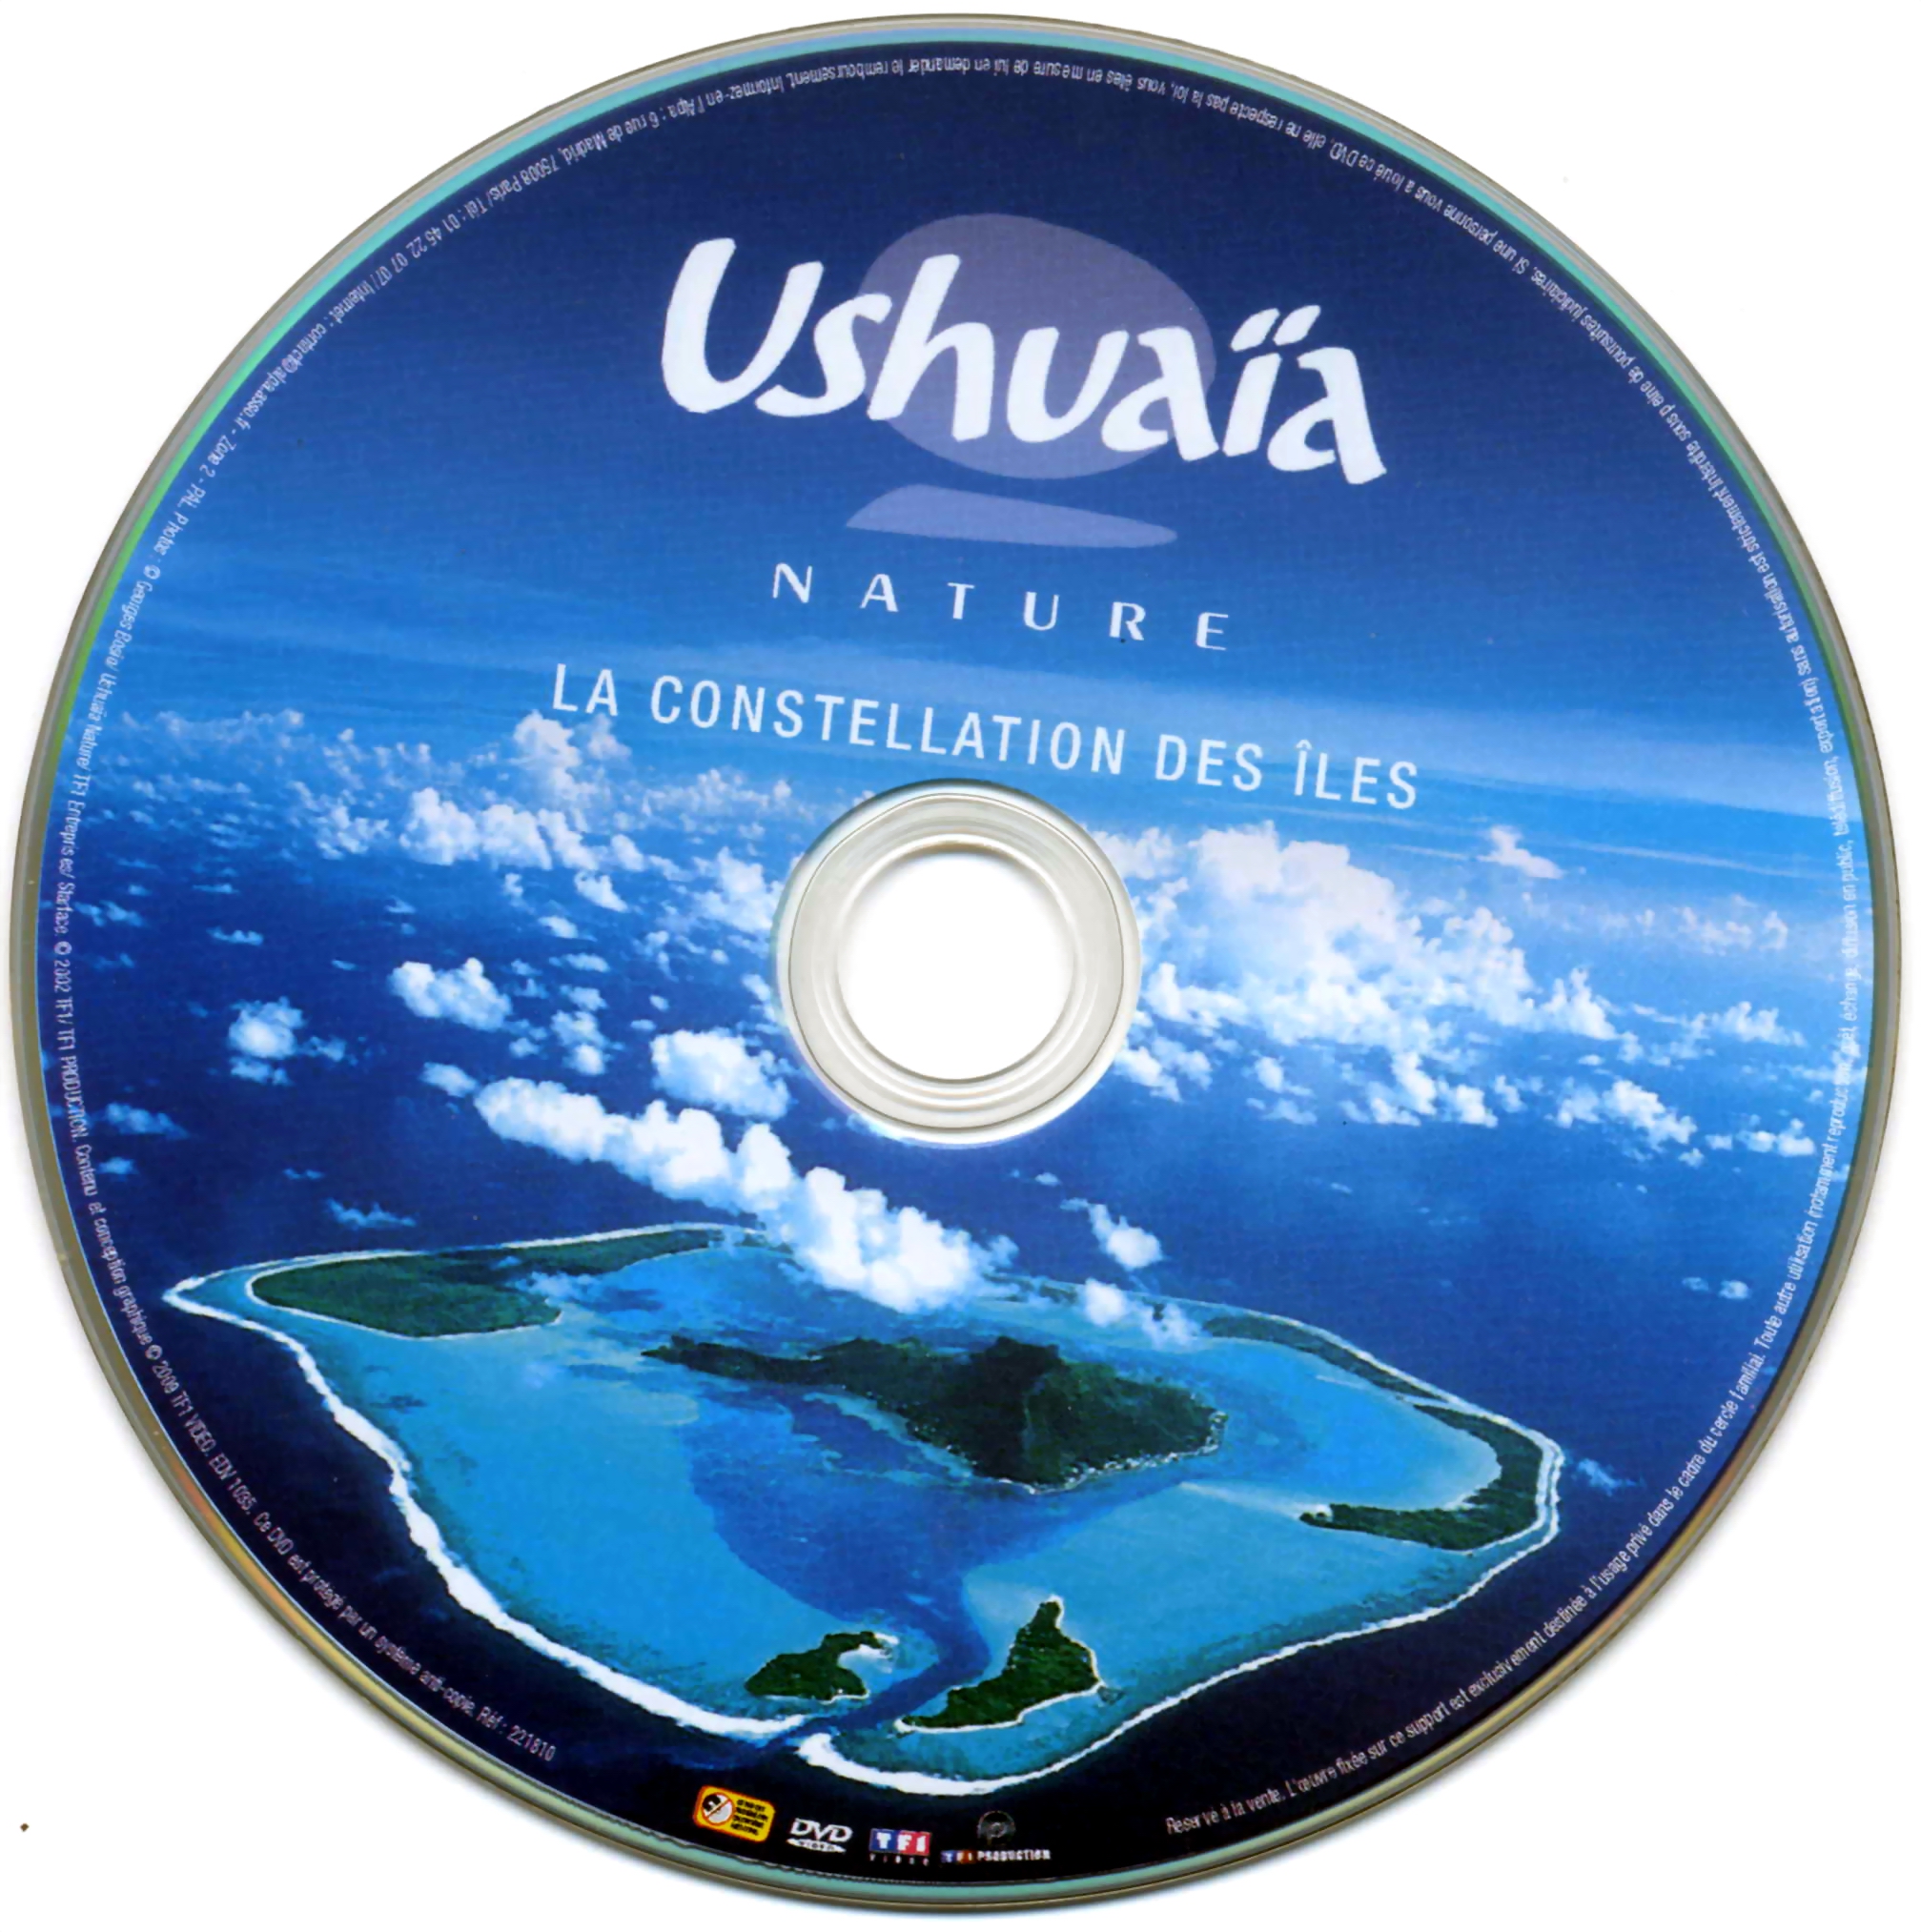 Ushuaia Nature - La constellation des iles